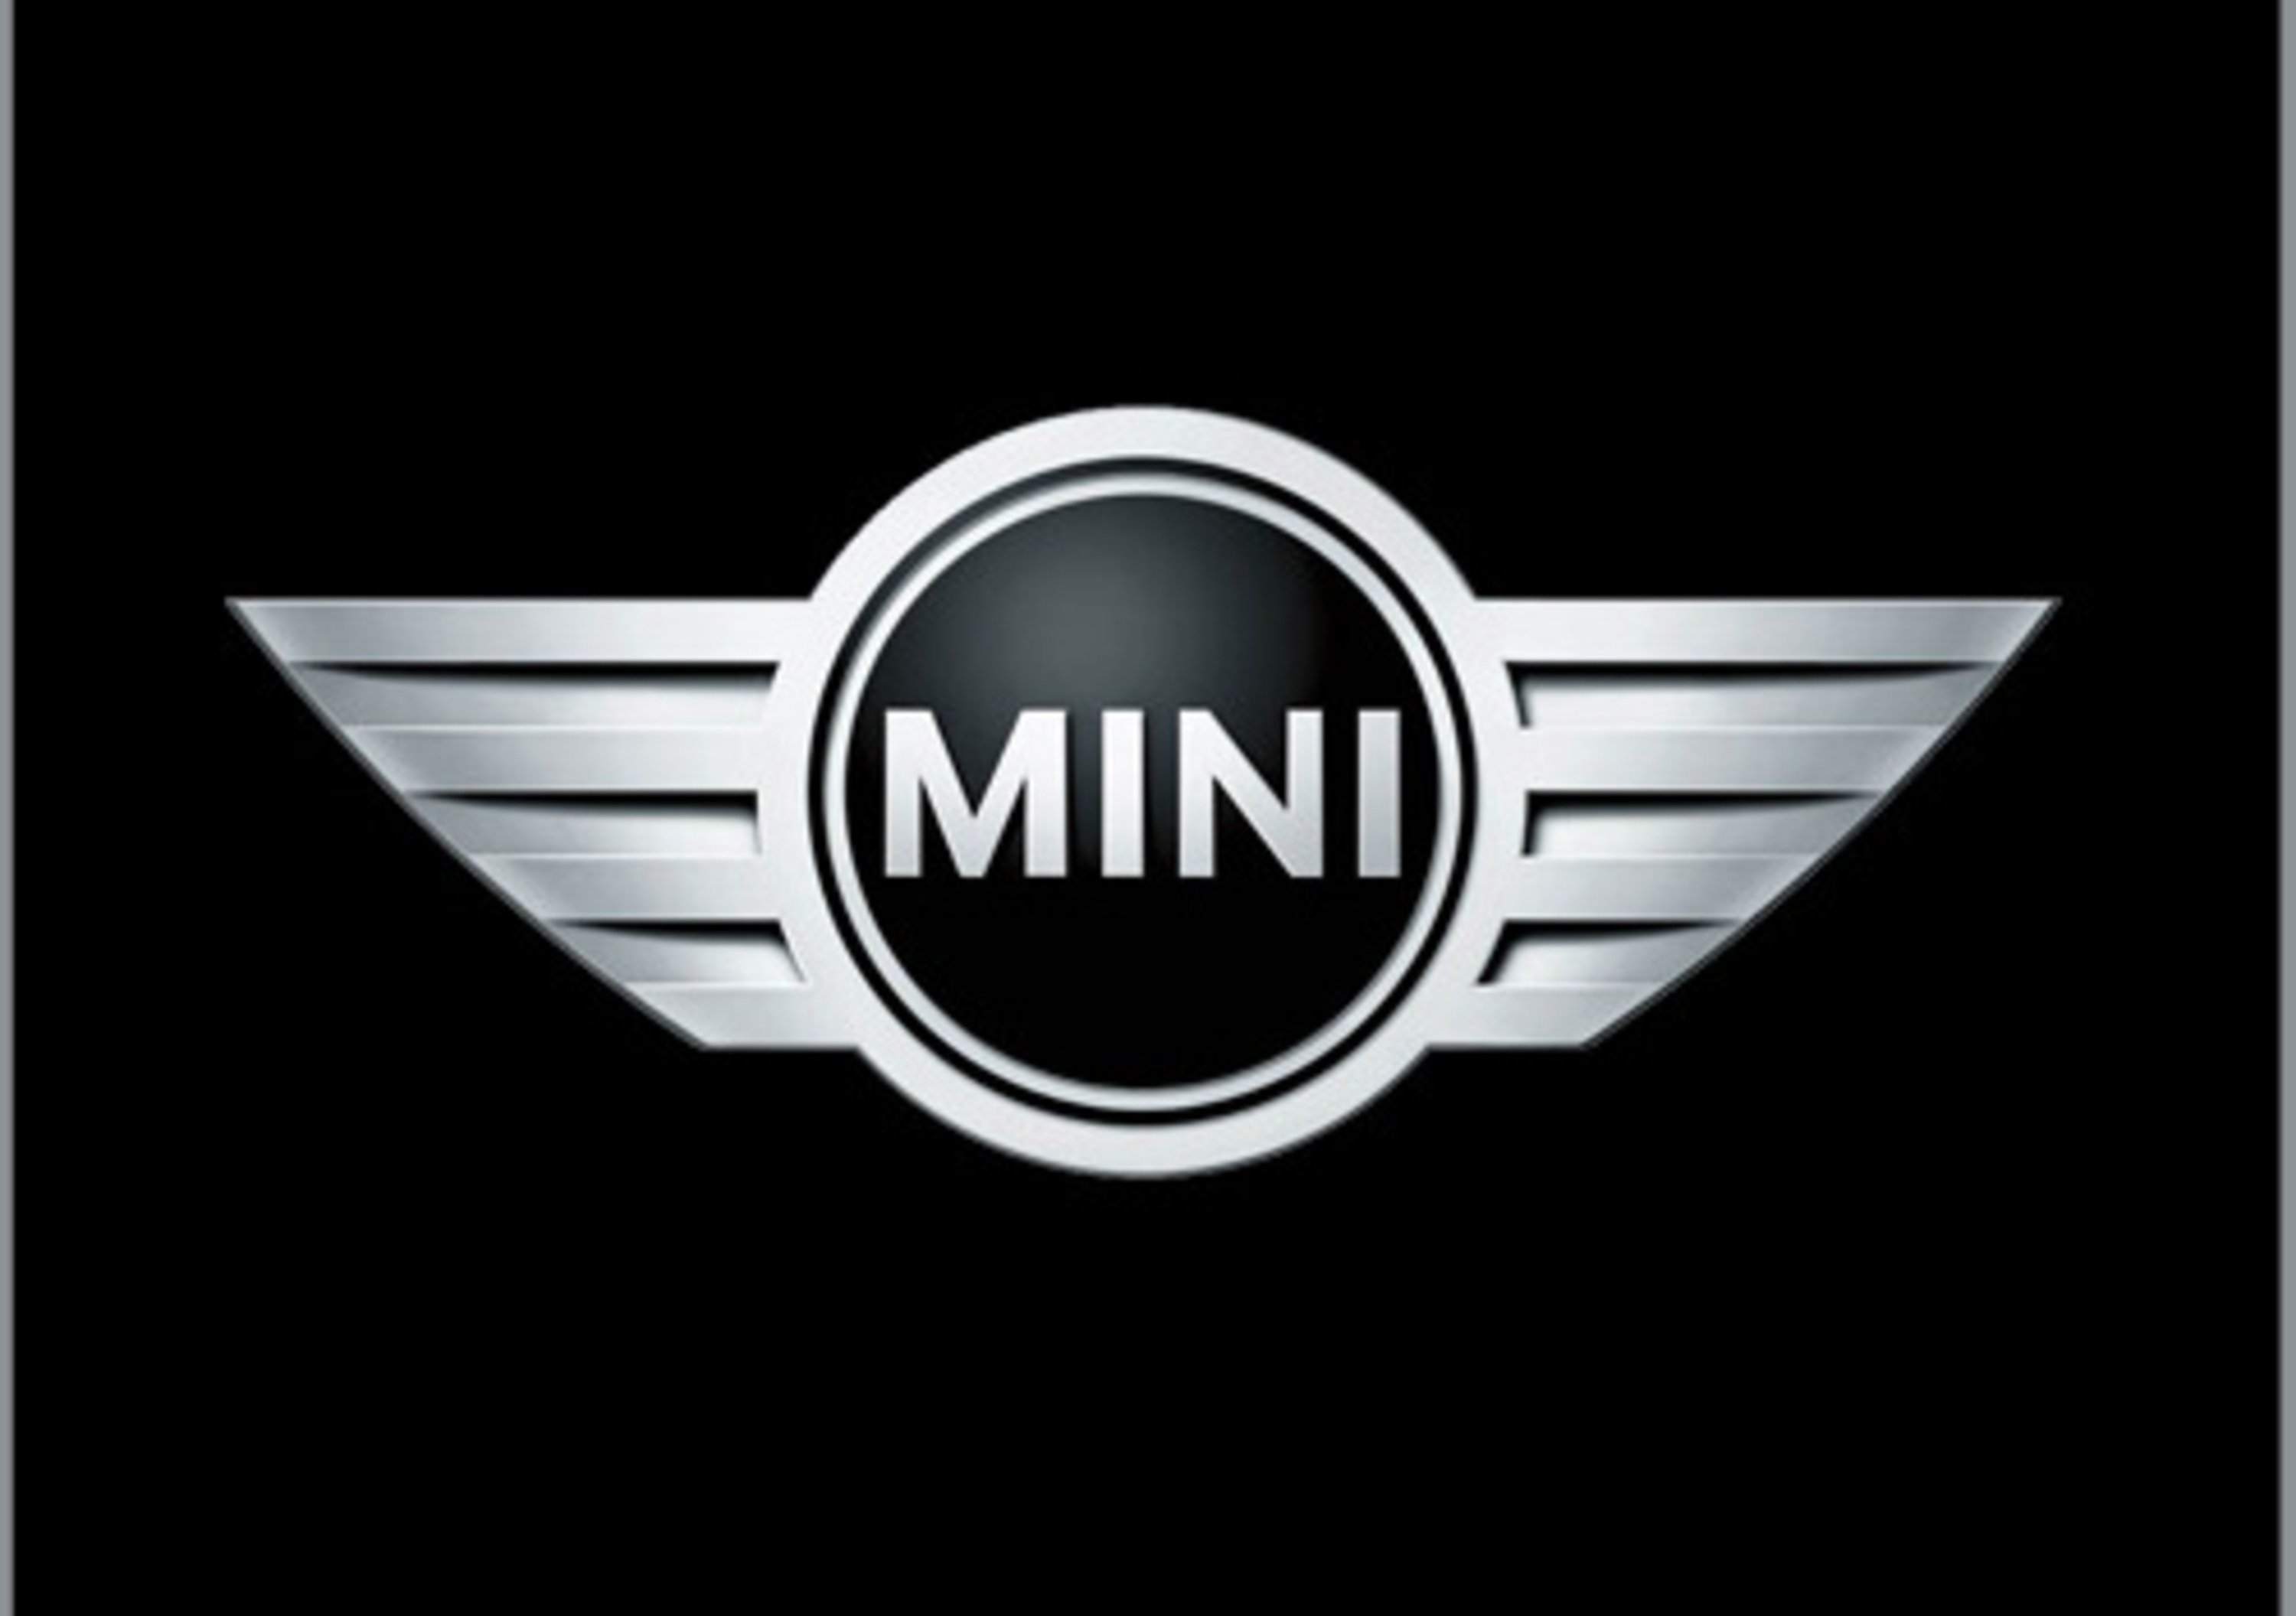 Mini United 2012